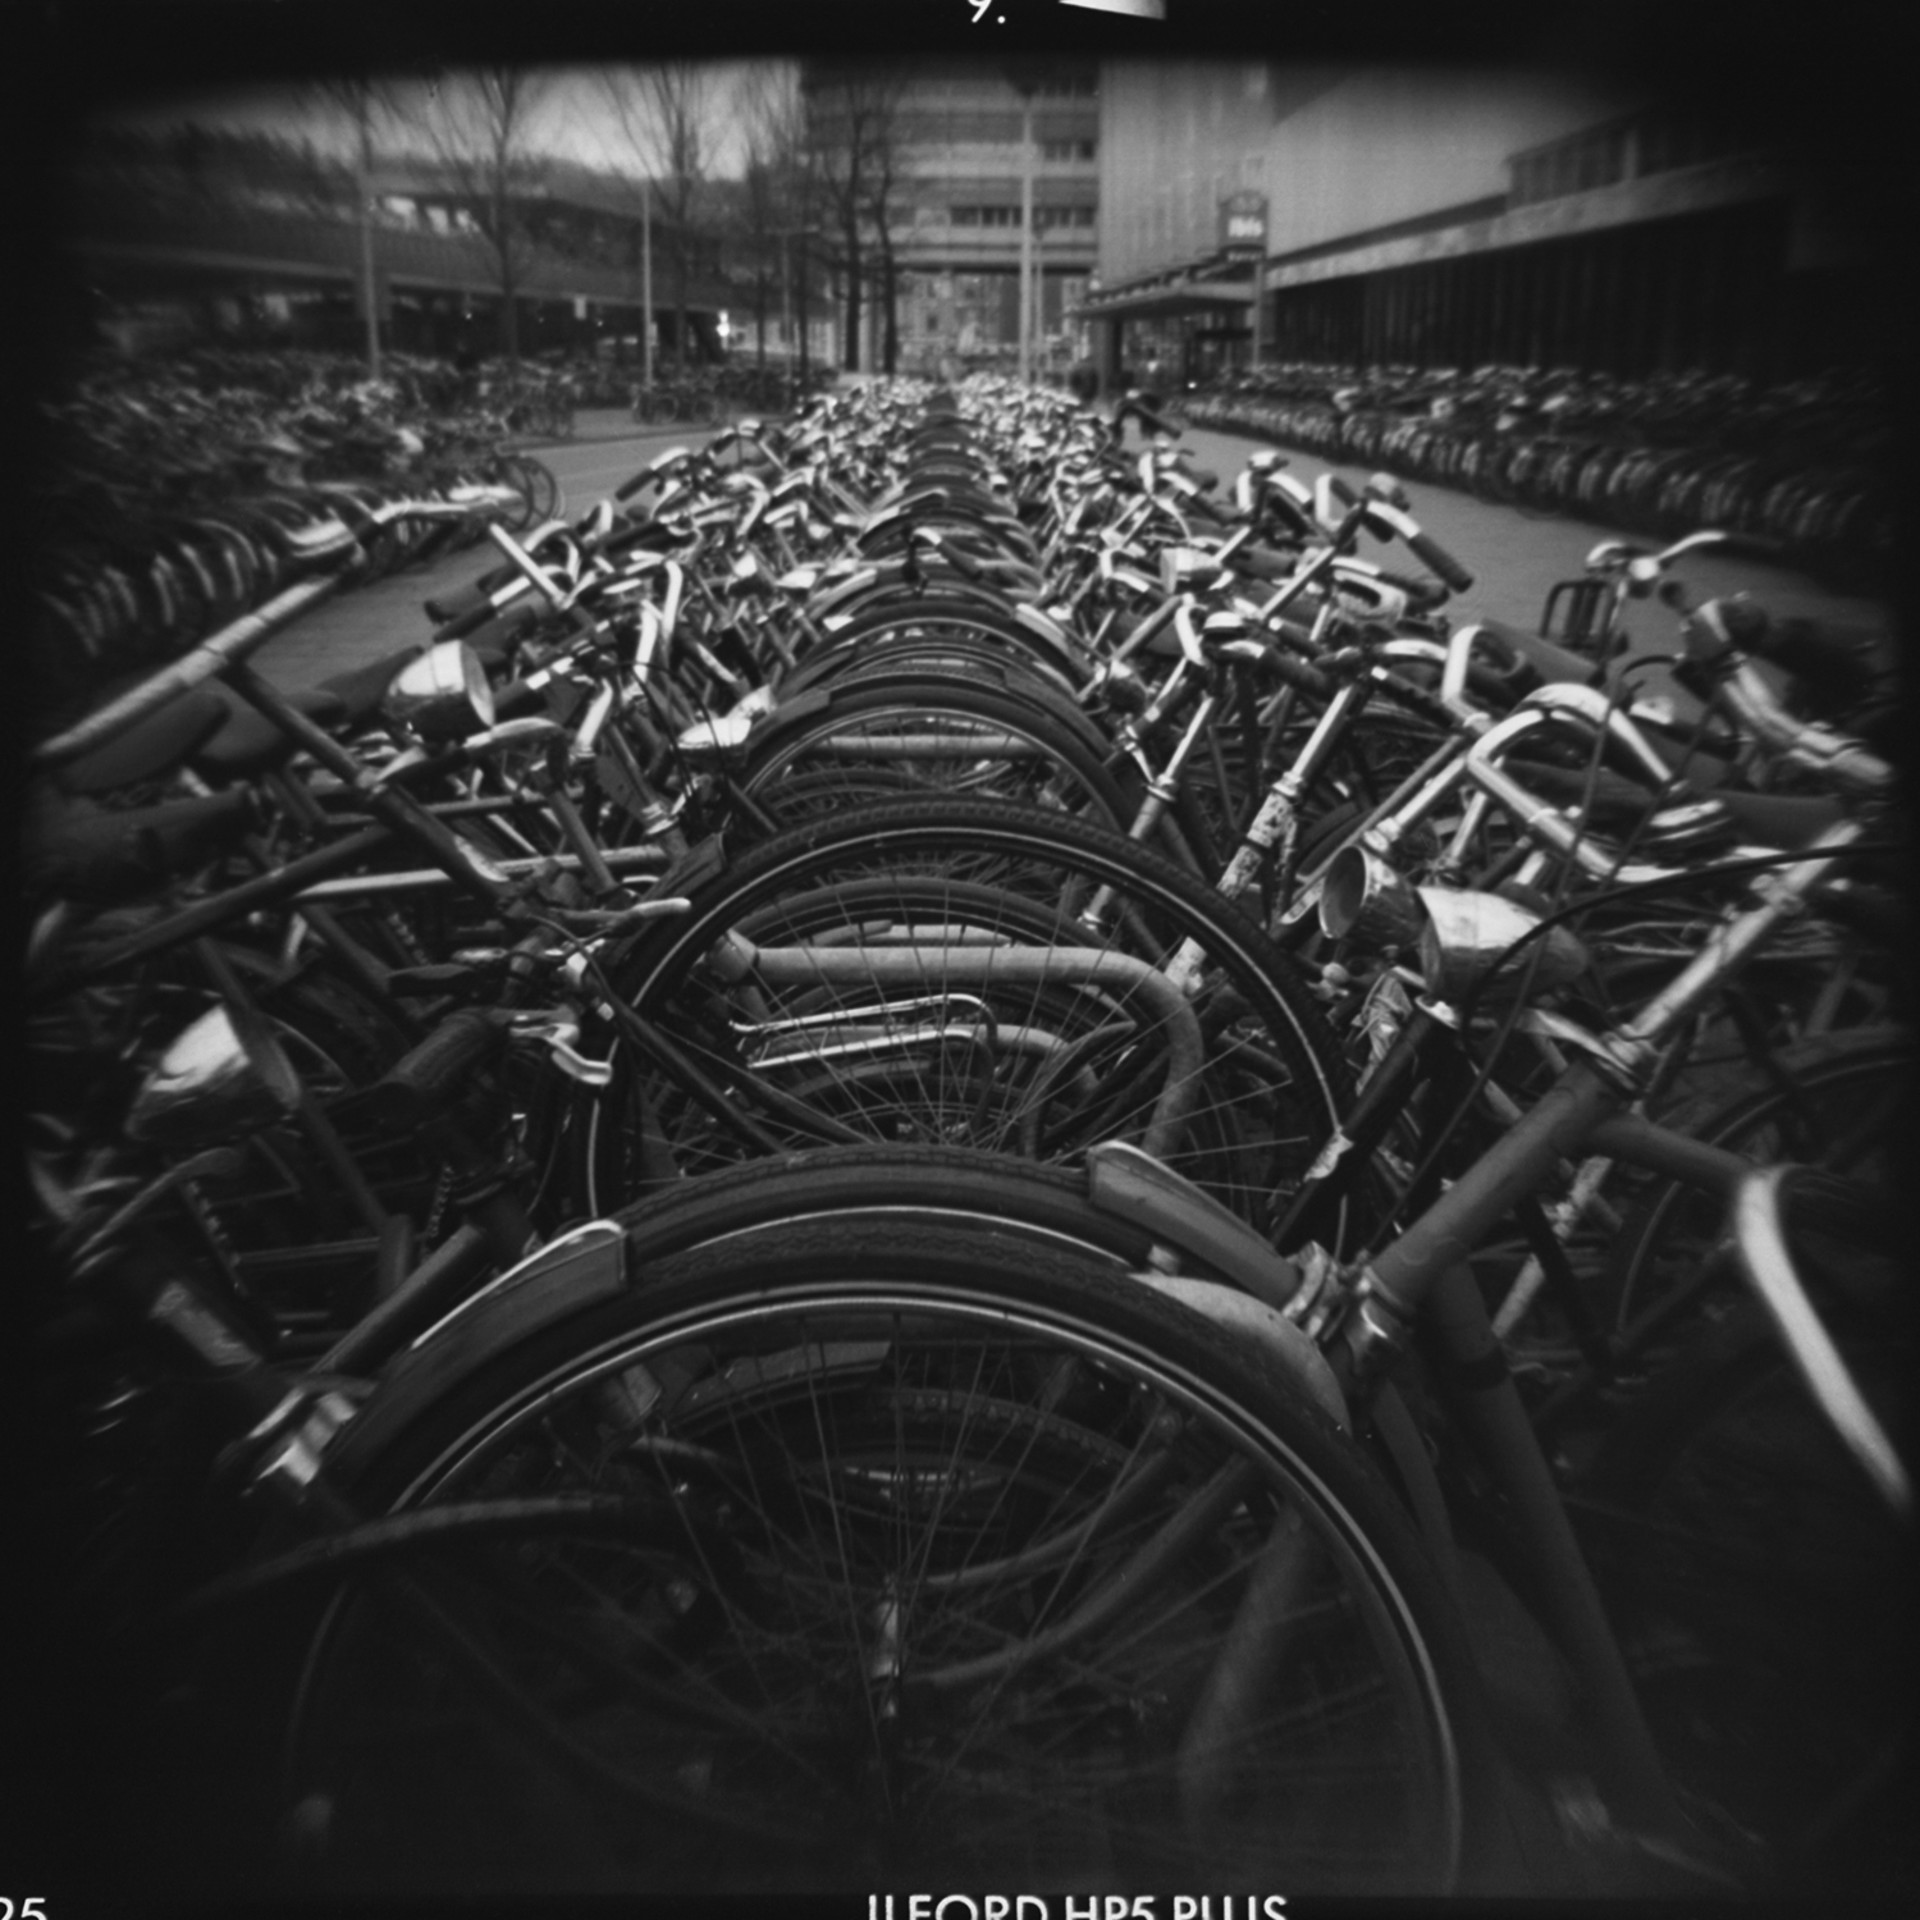 Bike Rack (A.P.) by Faustinus Deraet